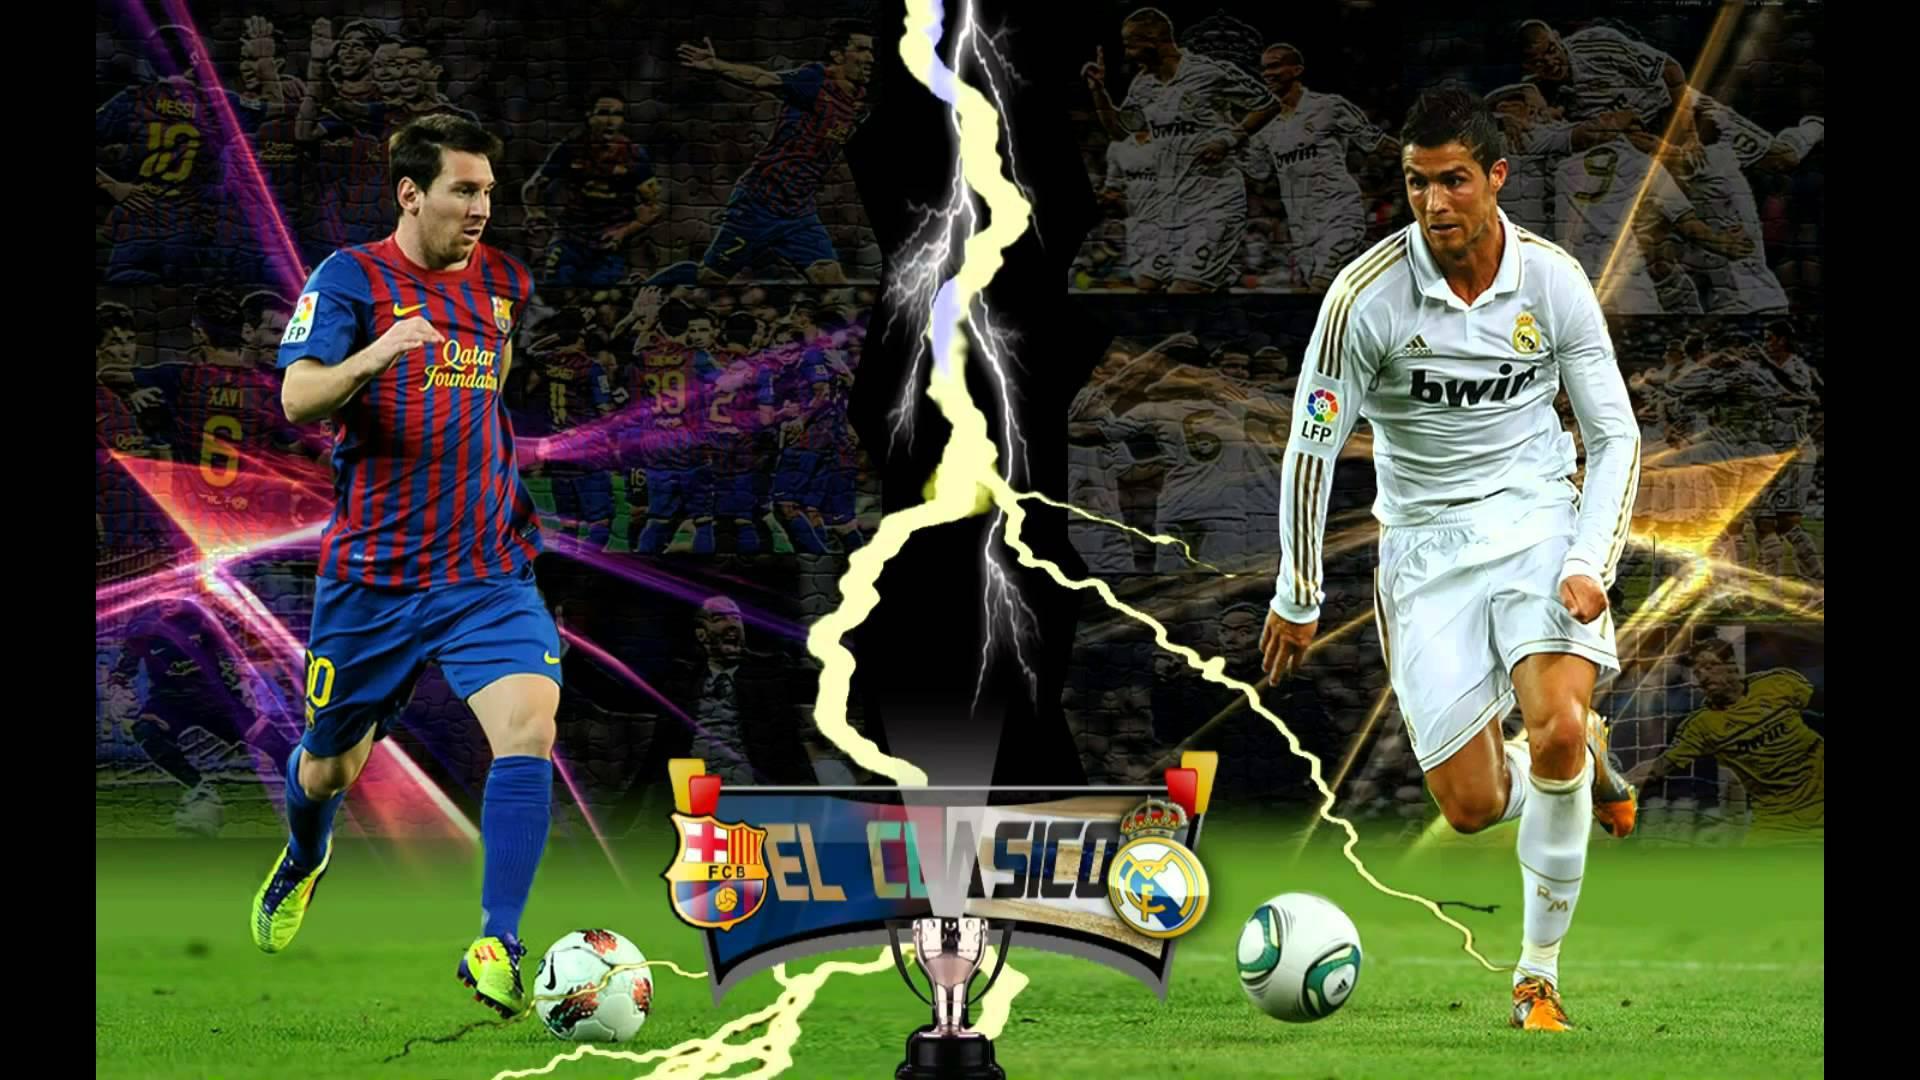 Cristiano Ronaldo Vs Messi 2014 Wallpaper For iPhone Desktop